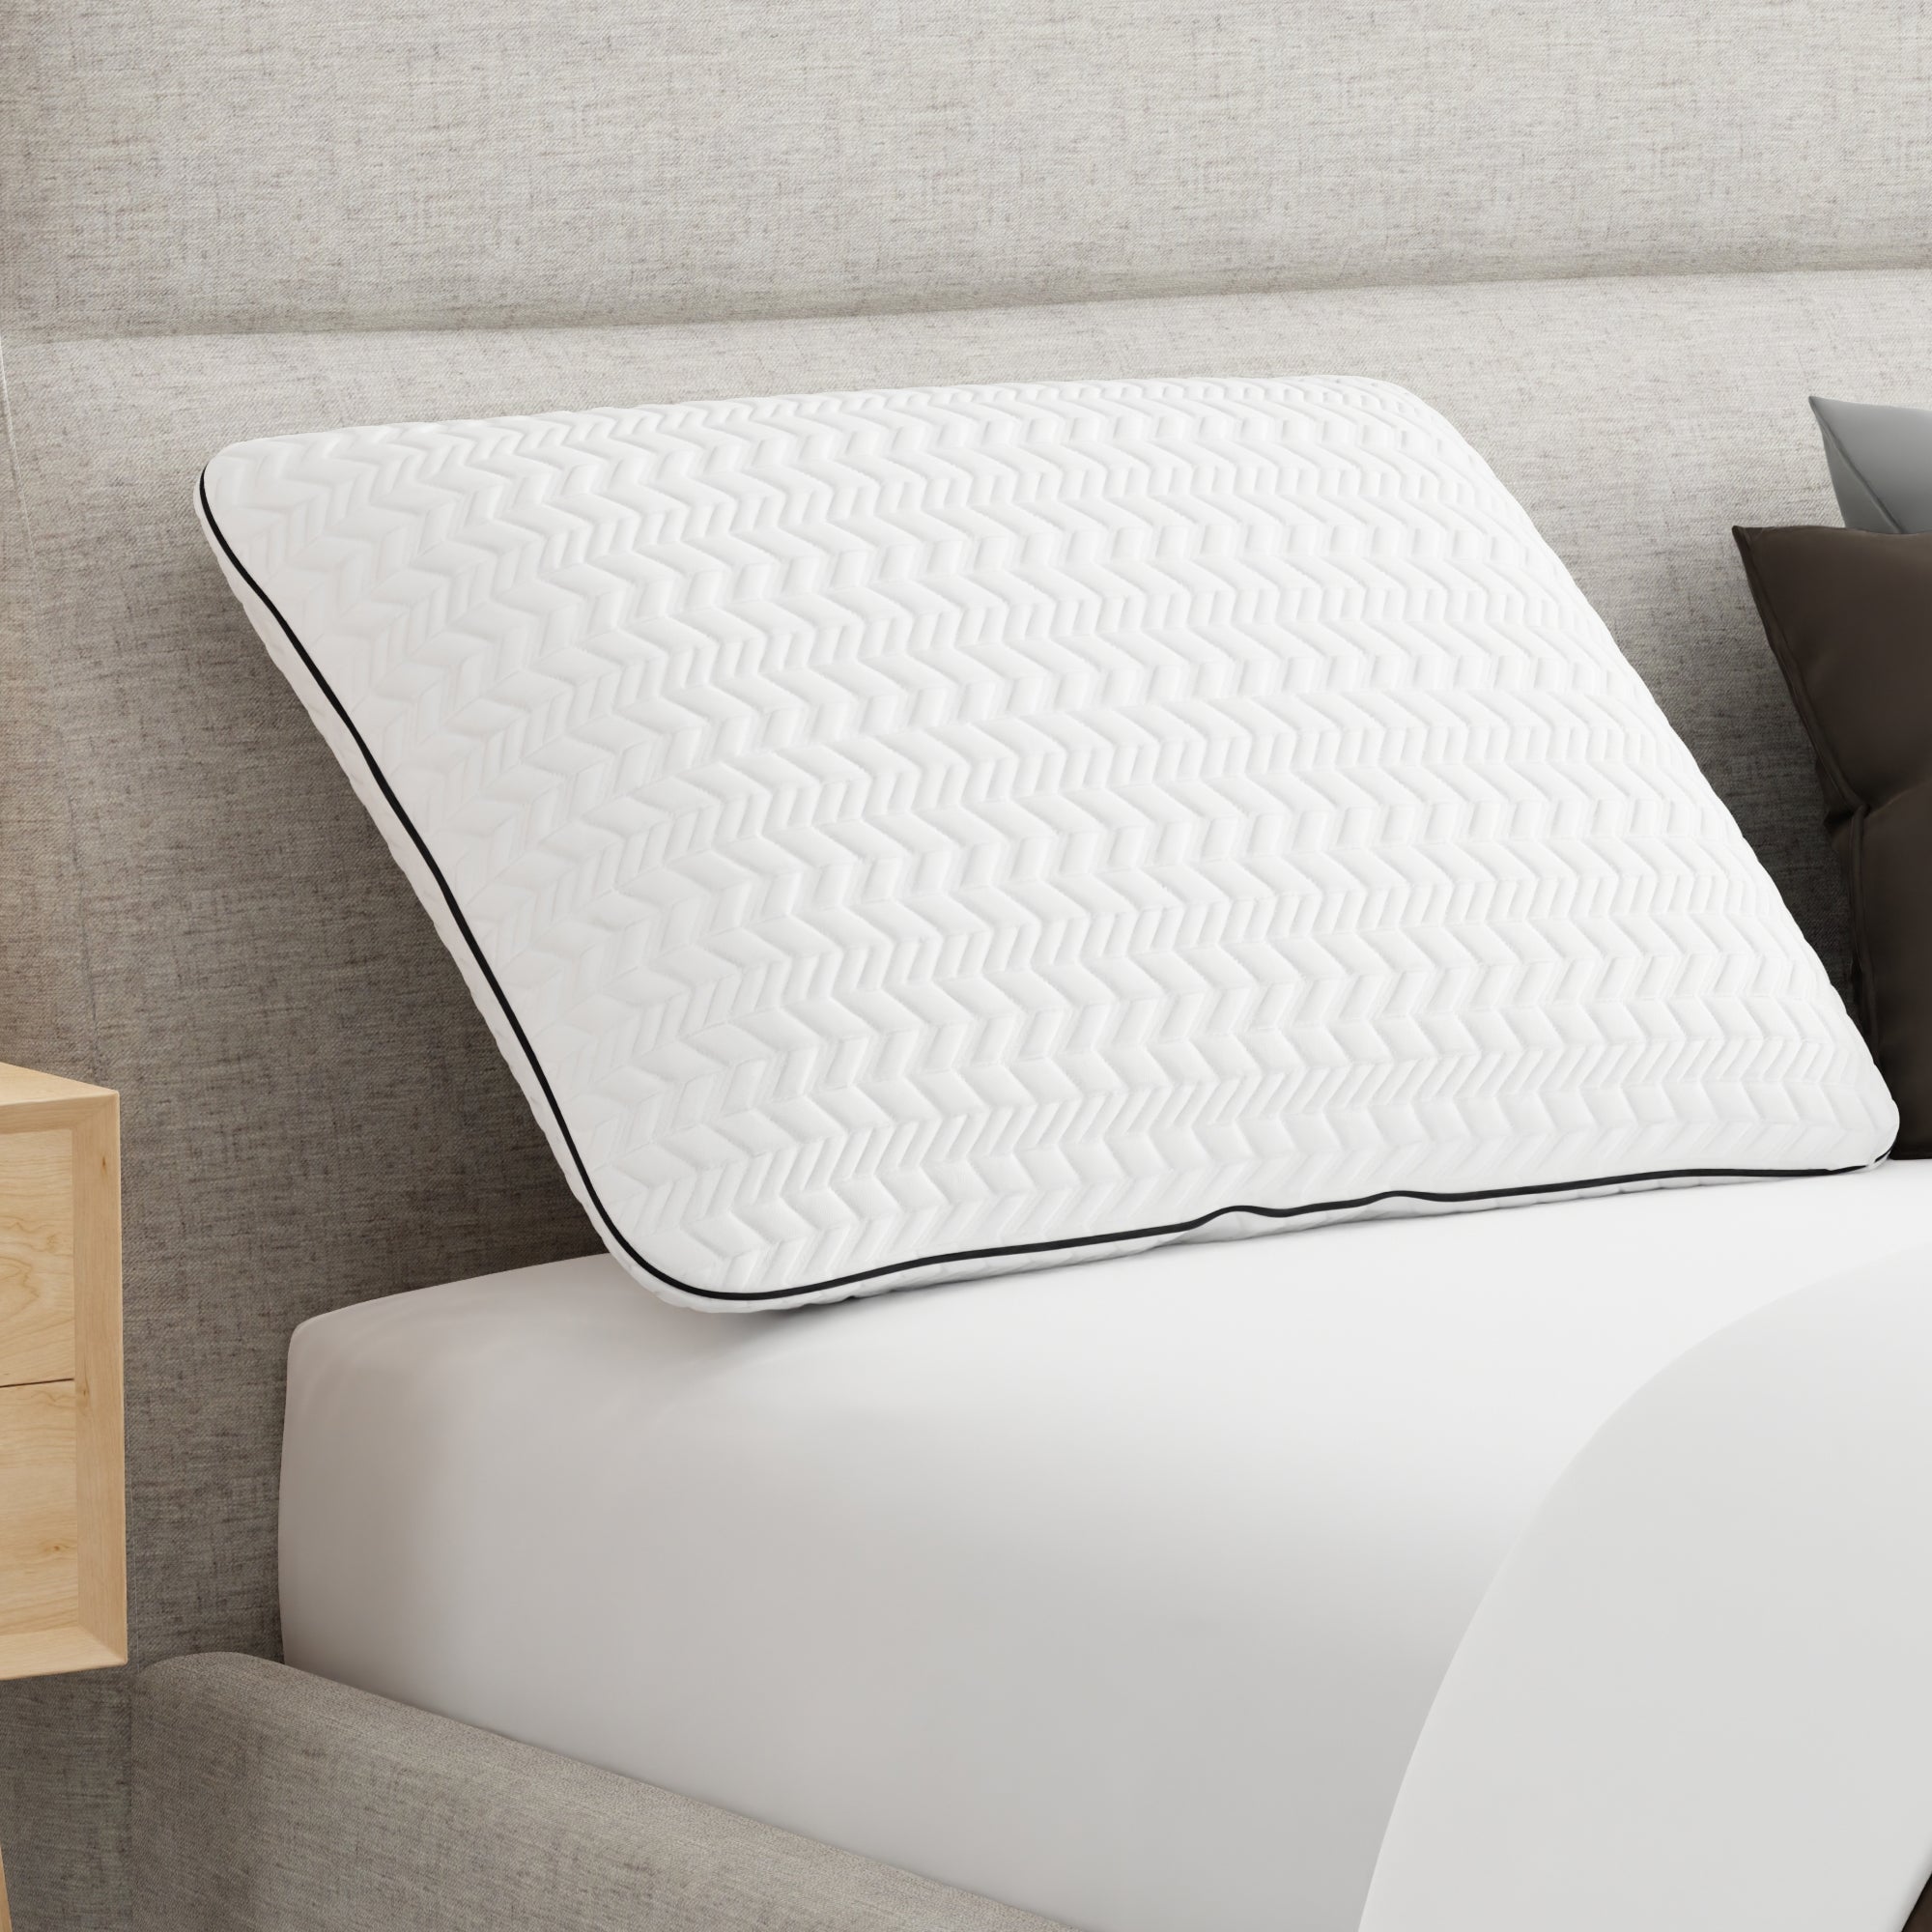 Reactive Foam Shredded Pillow- Adjustable Loft Height - BlissfulNights.com